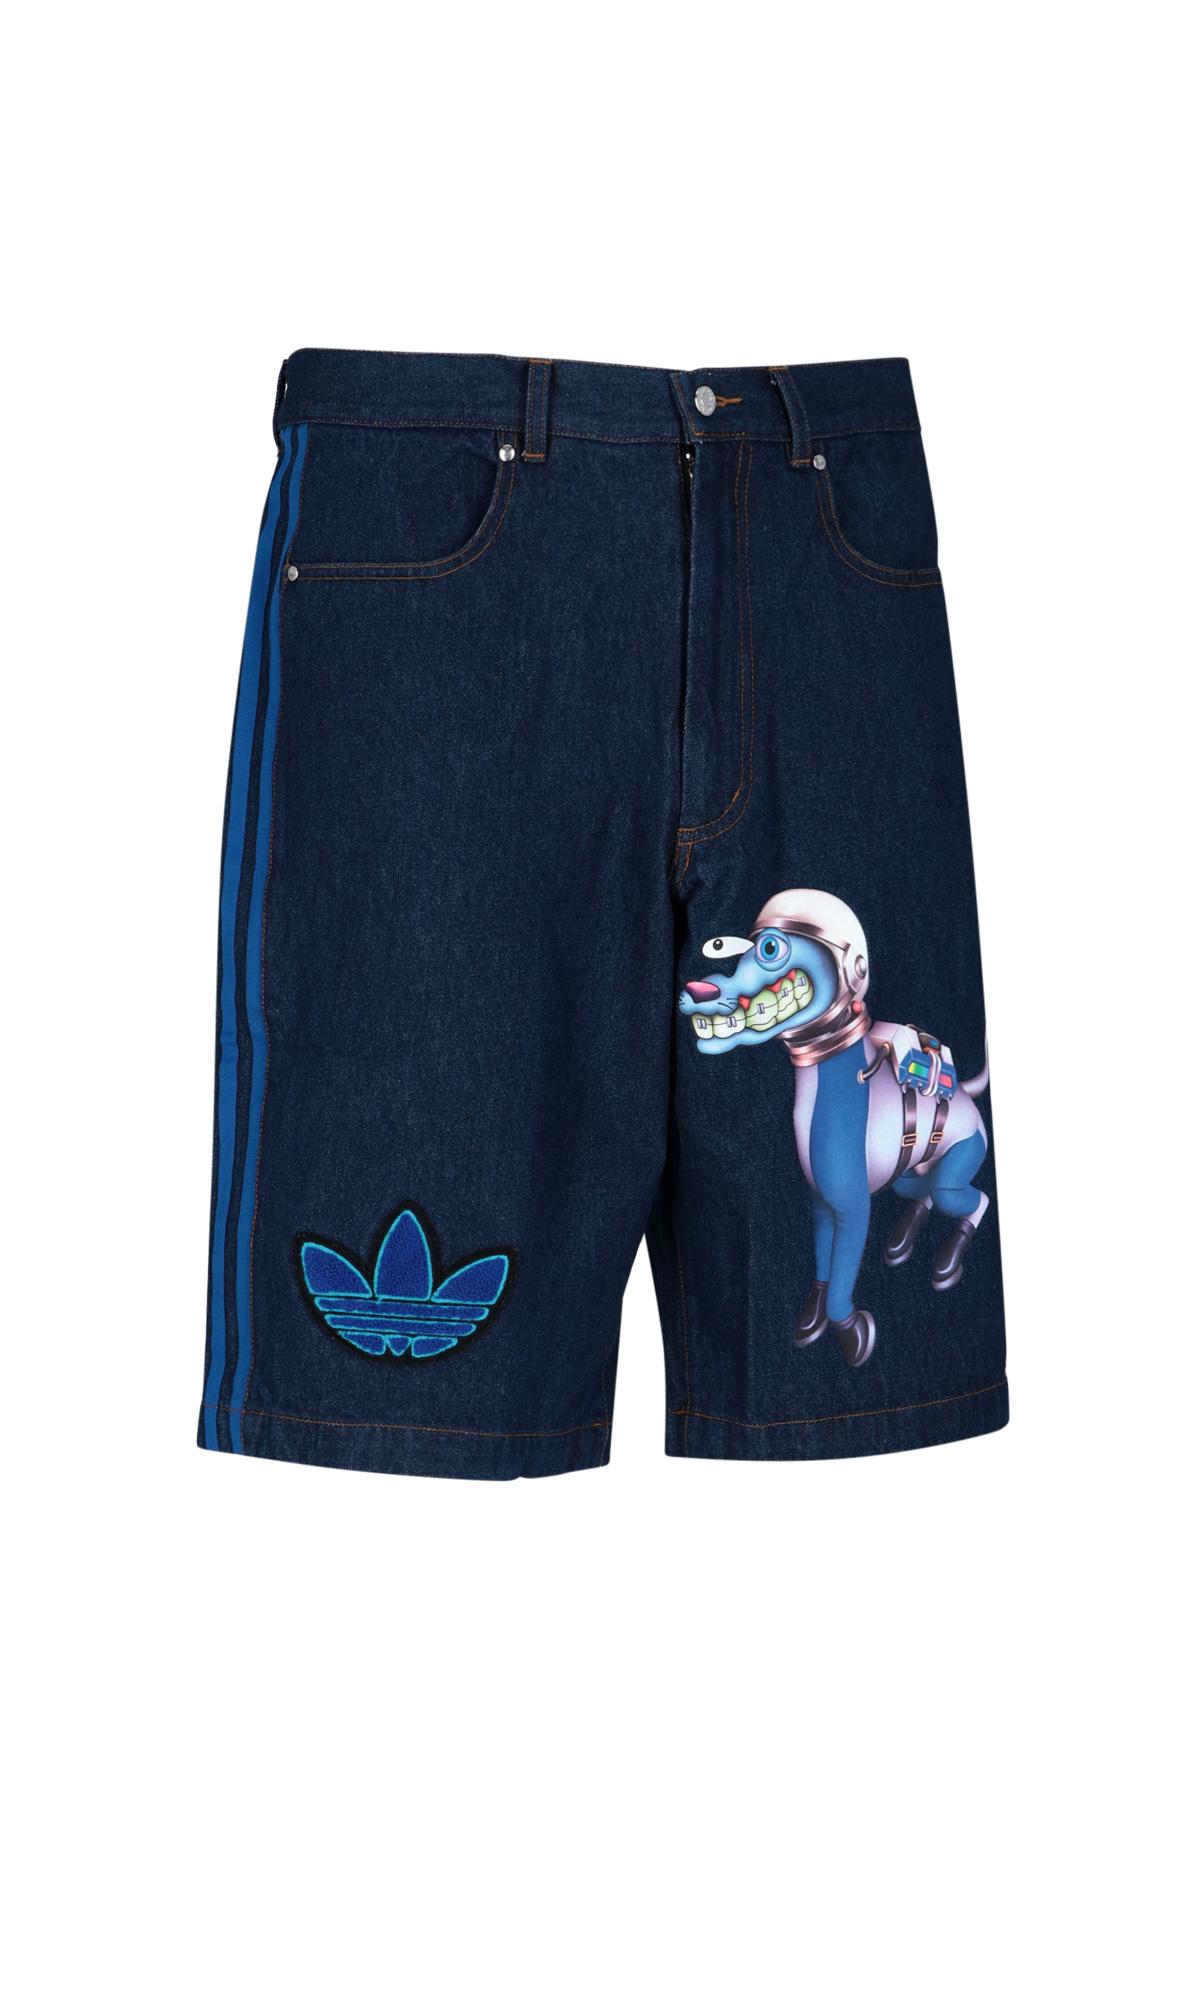 adidas X Kerwin Frost Denim Bermuda Shorts in Navy (Blue) for Men - Save  14% - Lyst